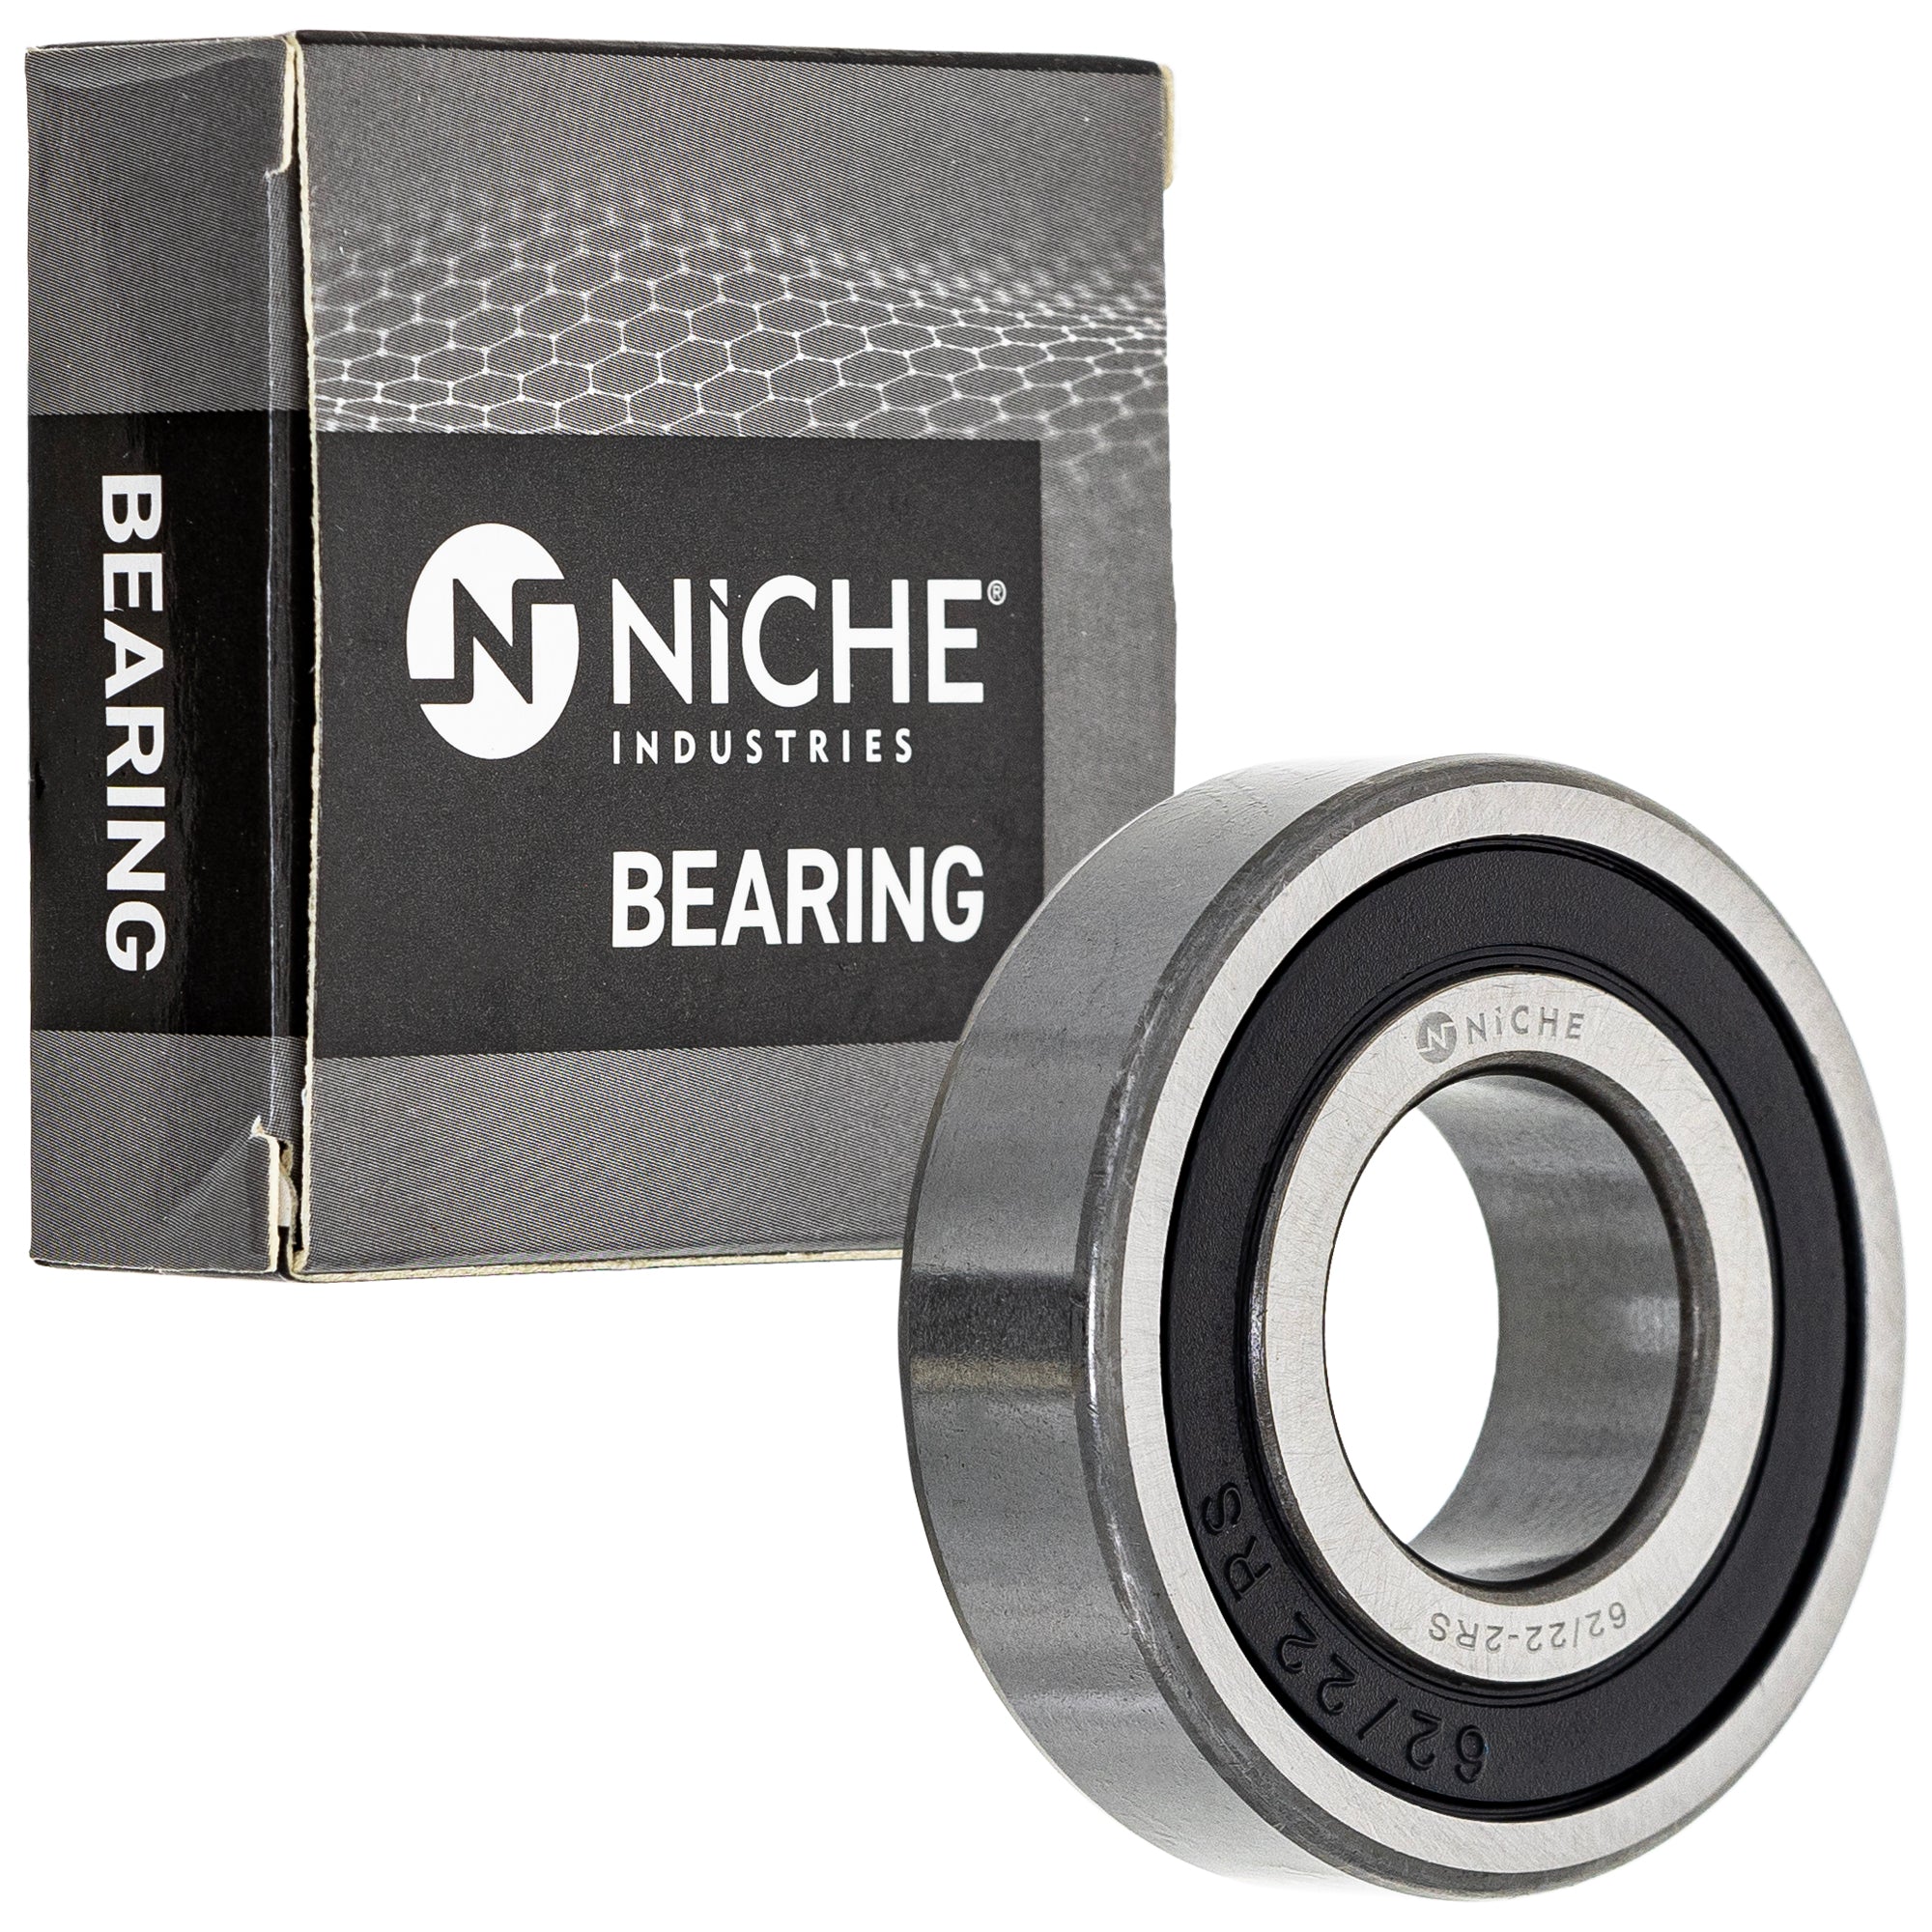 NICHE 519-CBB2271R Bearing for zOTHER YZ450FX YZ450F YZ426F YZ400F